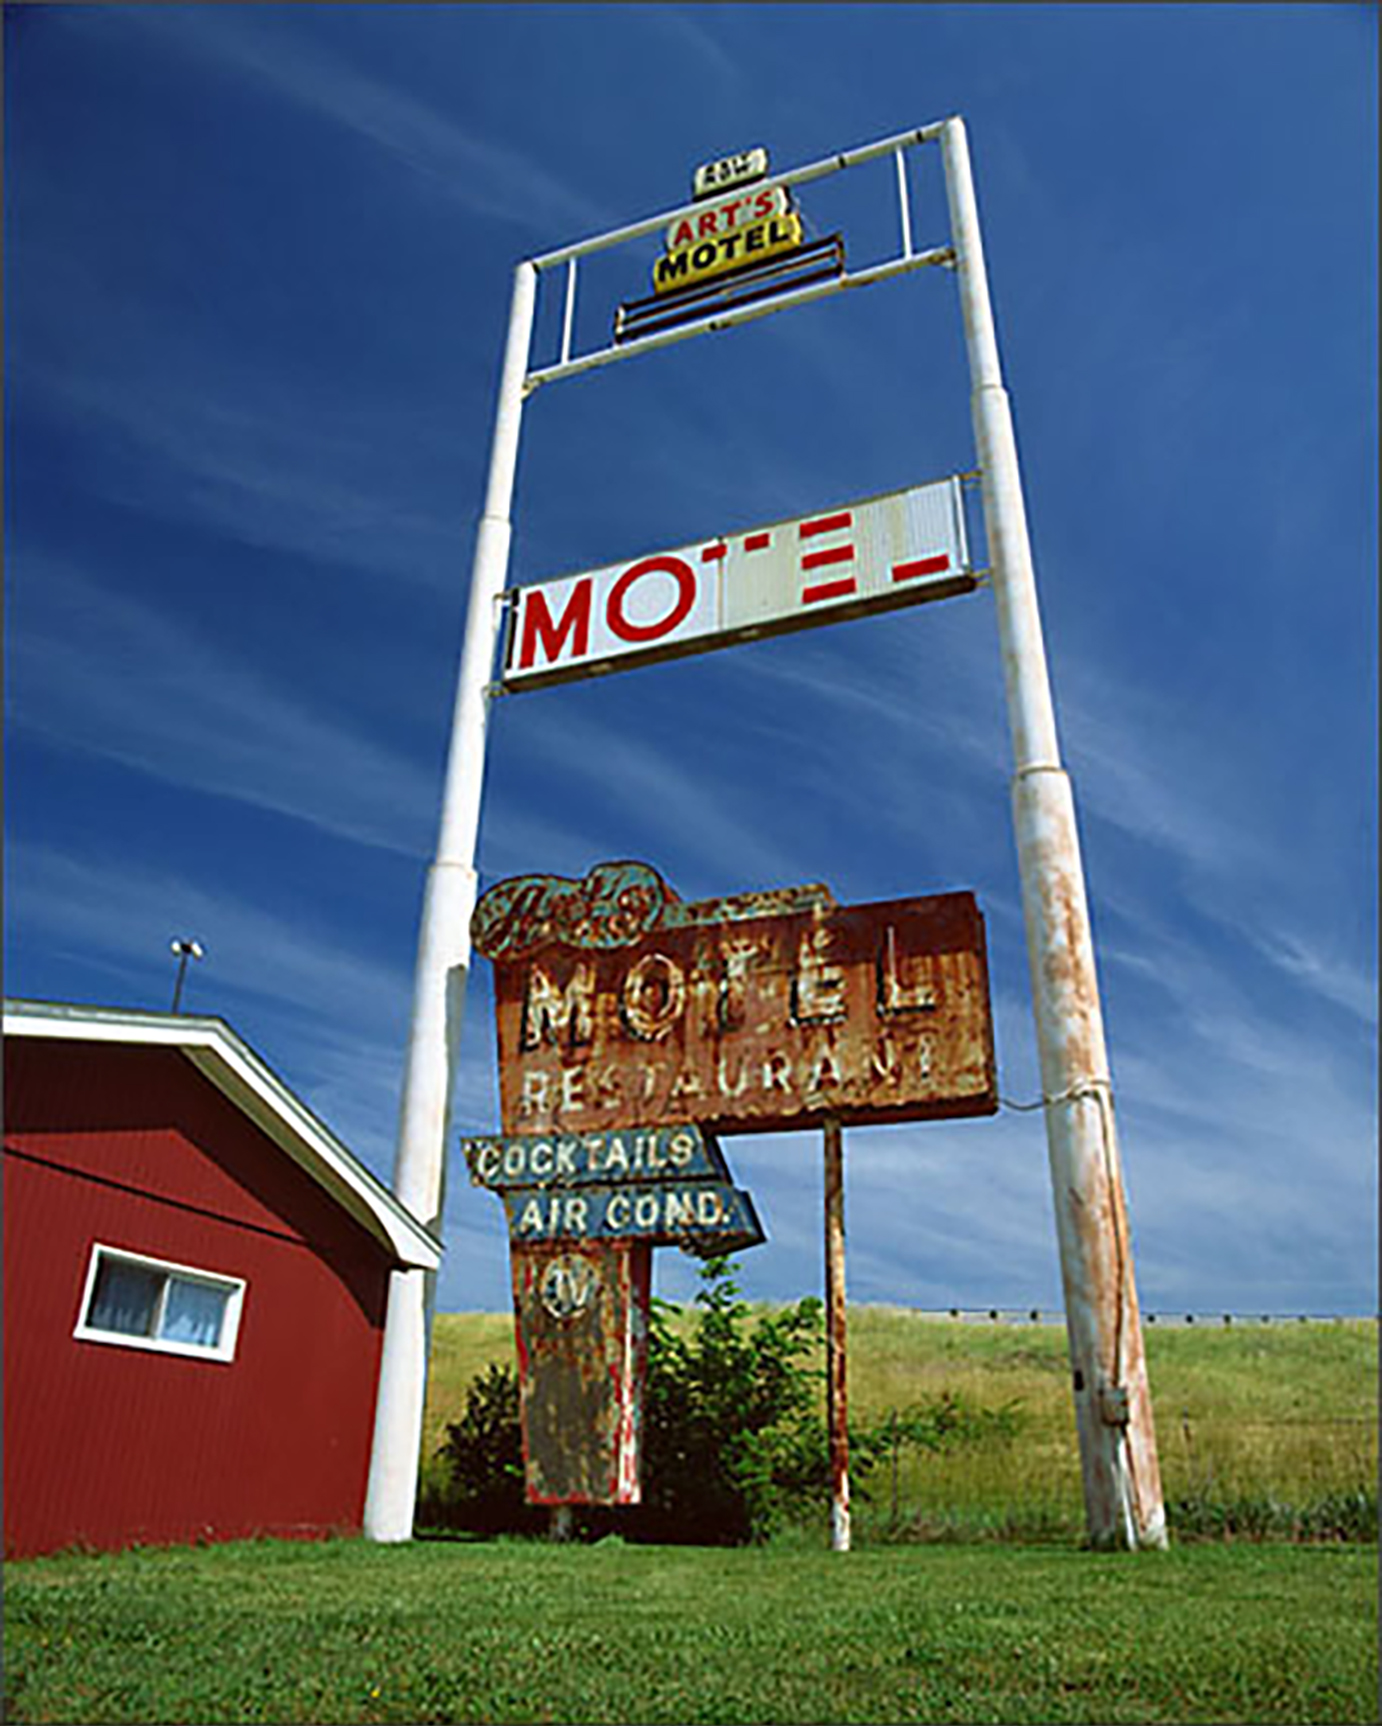 Arts motel